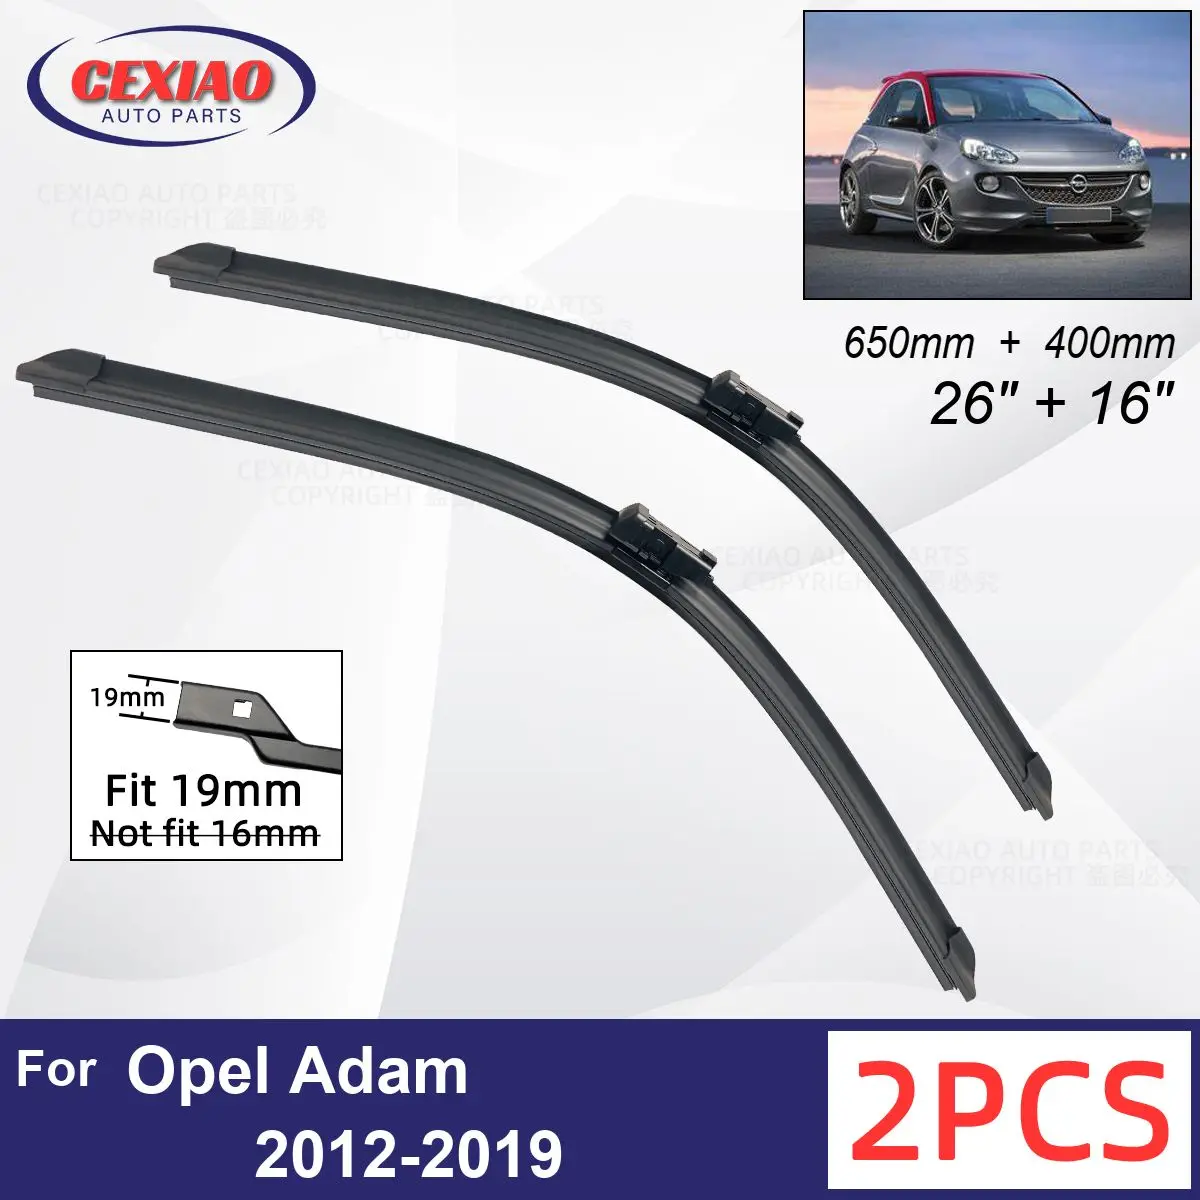 

Car Wiper For Opel Adam 2012-2019 Front Wiper Blades Soft Rubber Windscreen Wipers Auto Windshield 26"+16" 650mm + 400mm